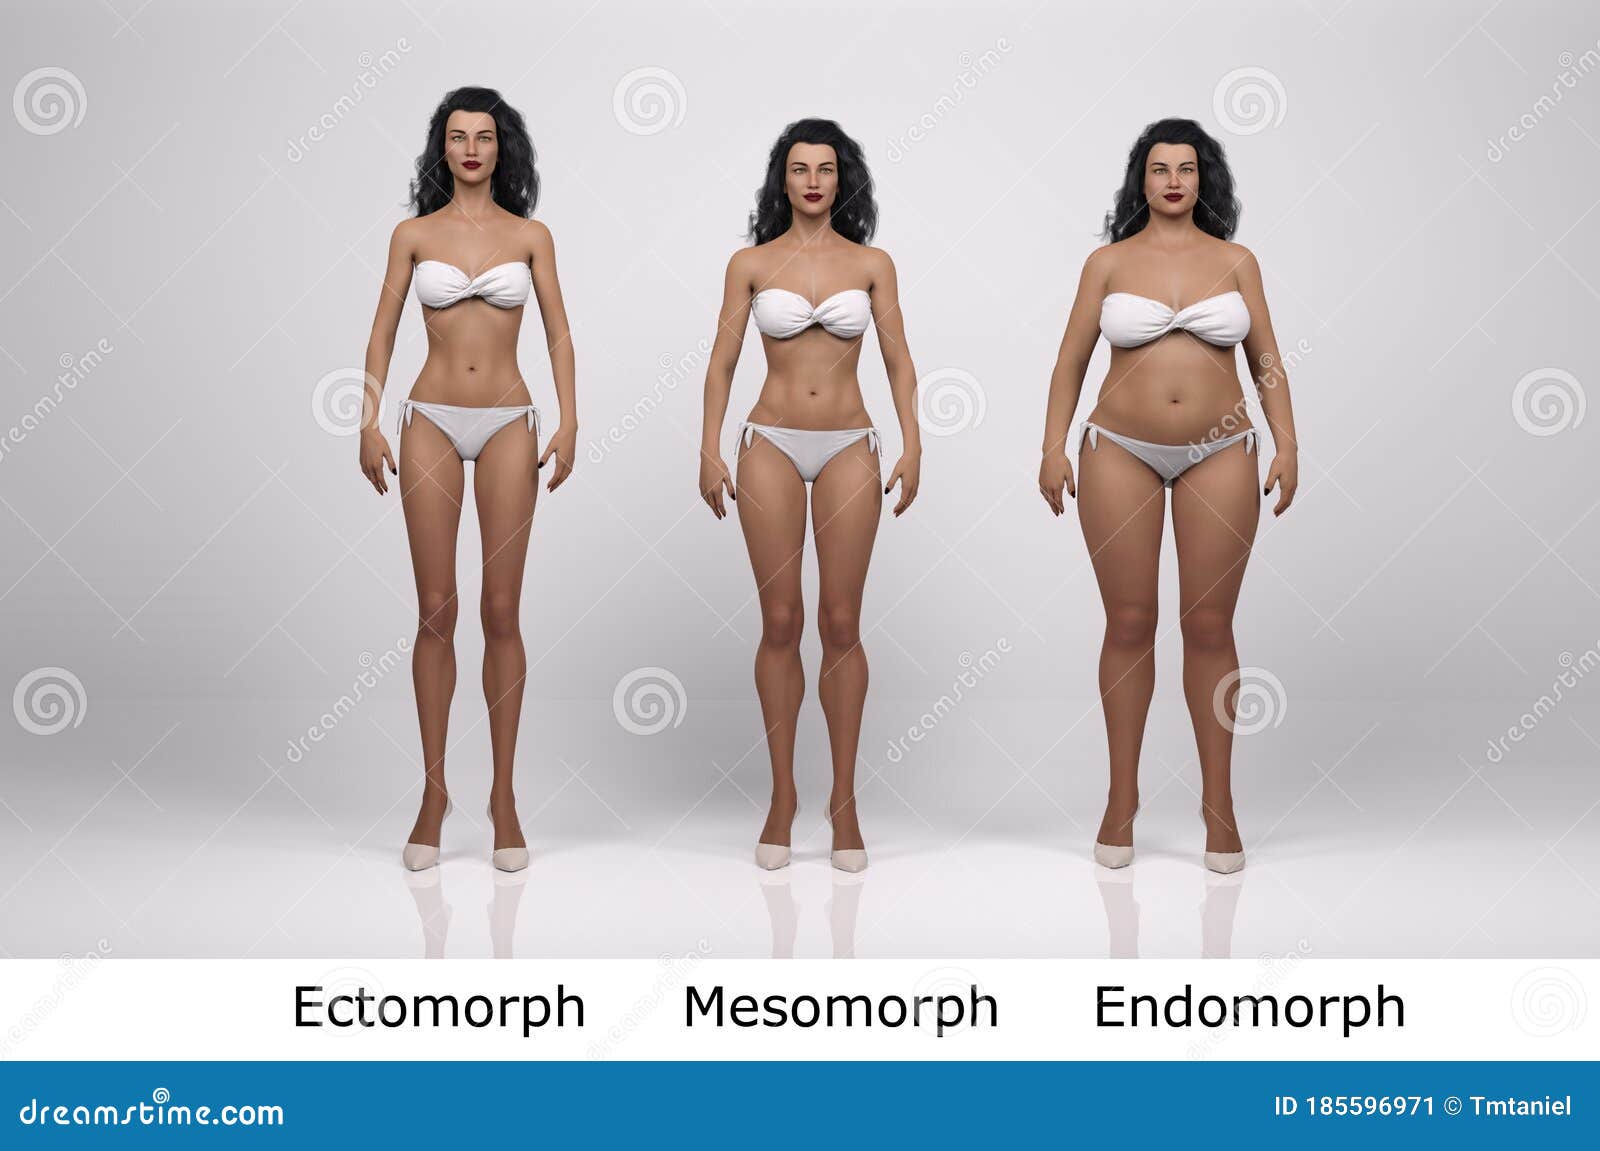 https://thumbs.dreamstime.com/z/d-rendering-portrait-standing-female-body-type-ectomorph-skinny-type-mesomorph-muscular-type-endomorph-heavy-weight-type-d-185596971.jpg